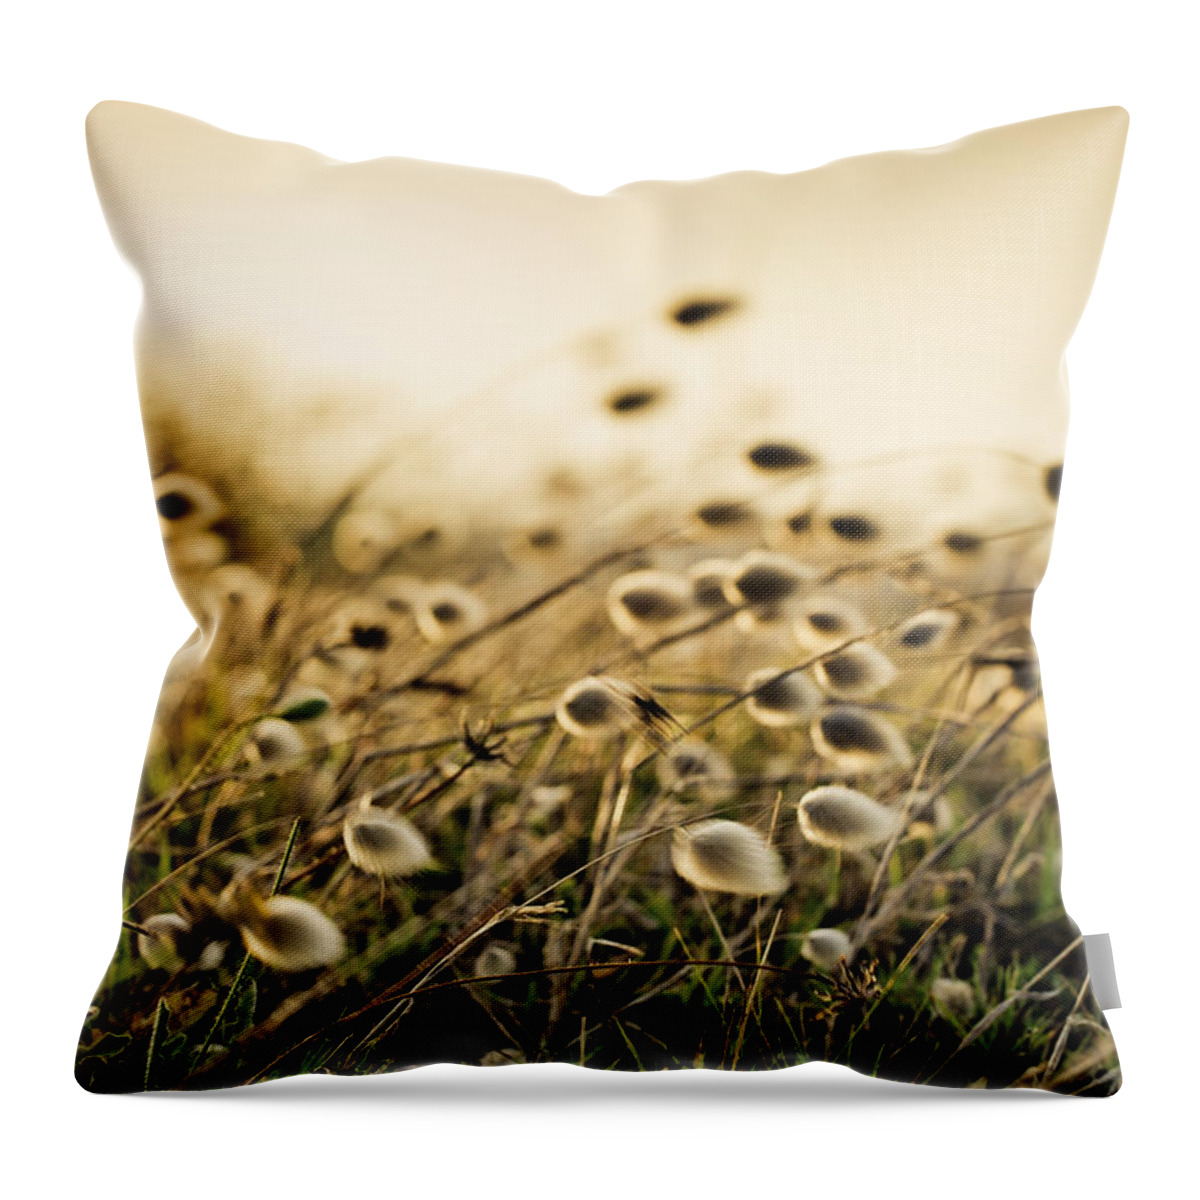 Reedgrass Throw Pillow featuring the photograph Evening by Nailia Schwarz